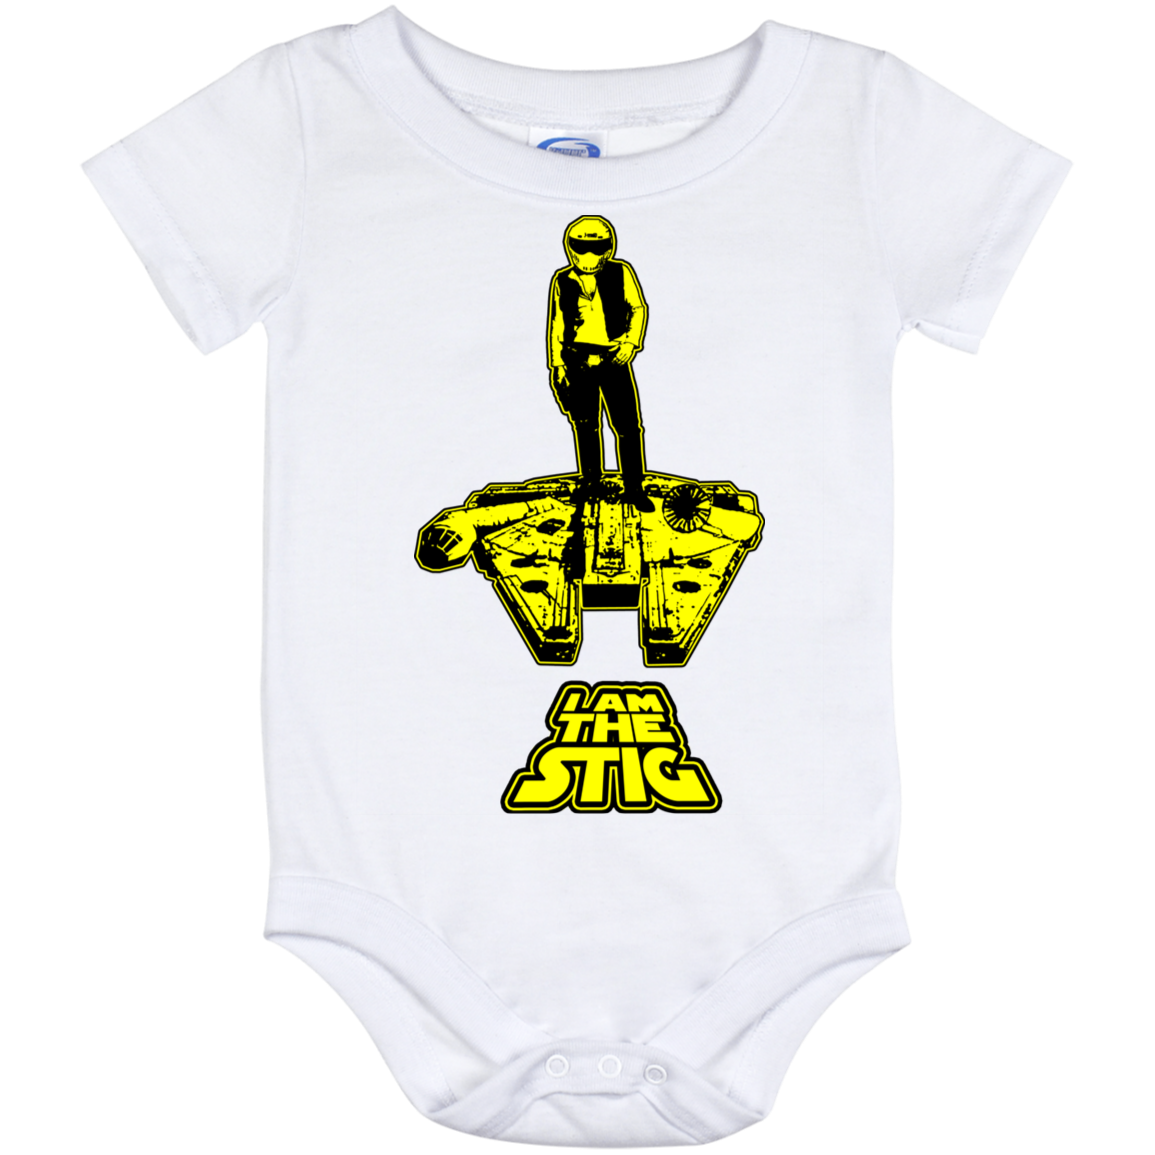 ArtichokeUSA Custom Design. I am the Stig. Han Solo / The Stig Fan Art. Baby Onesie 12 Month